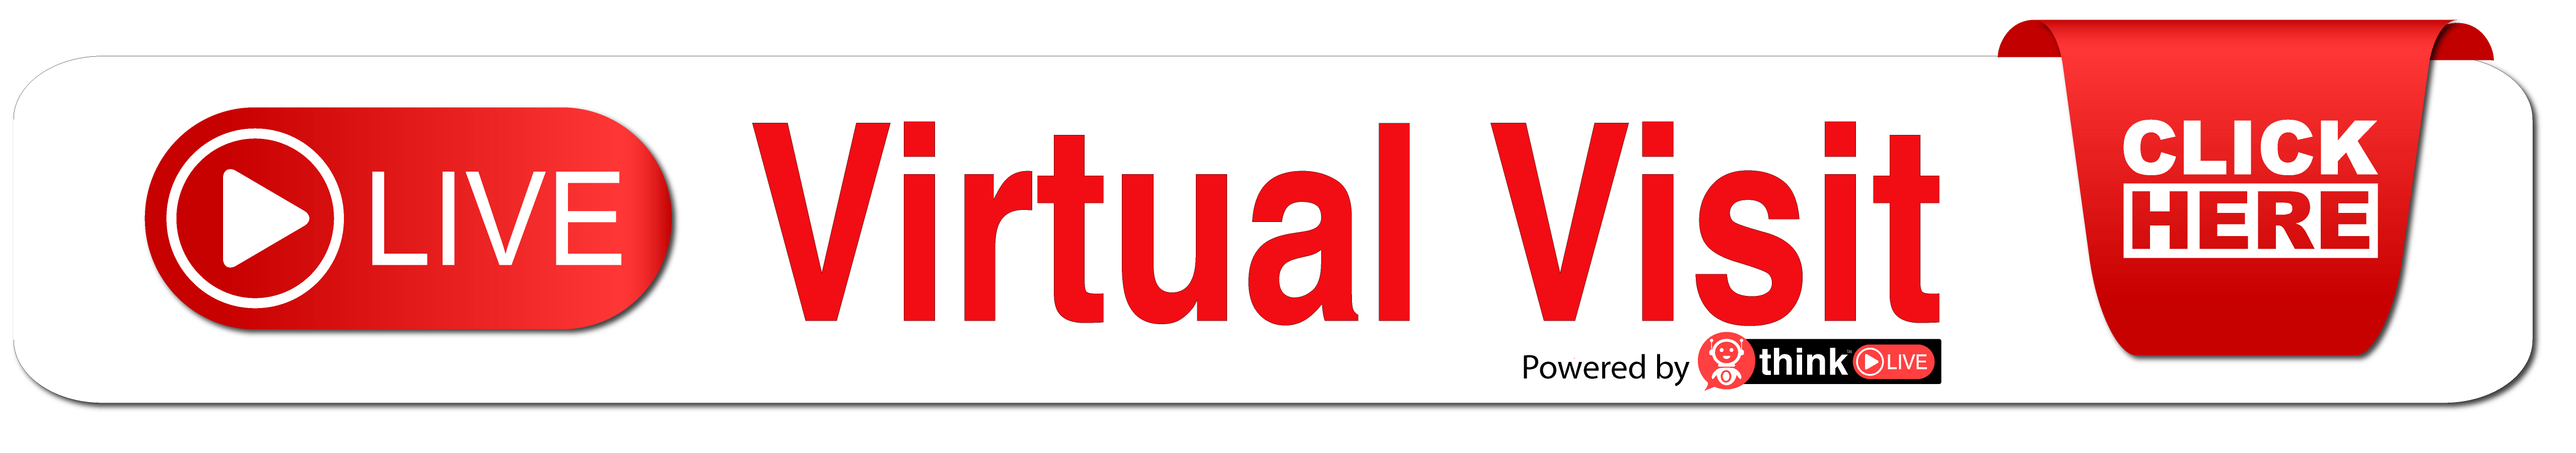 Live Virtual Visit